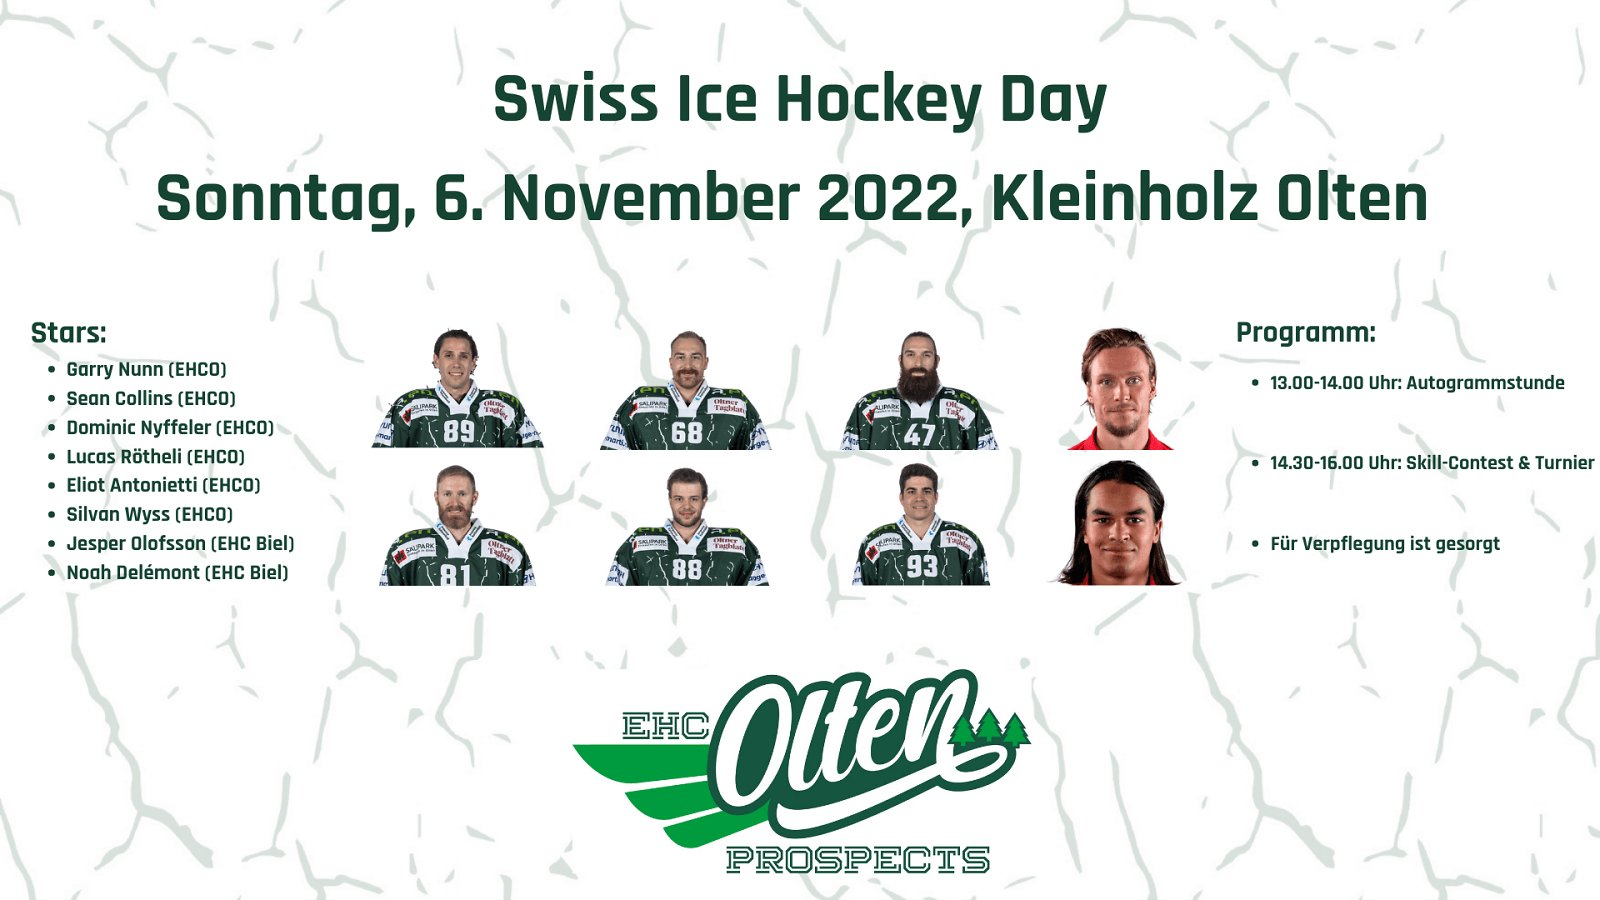 Tolles Programm am Swiss Ice Hockey Day